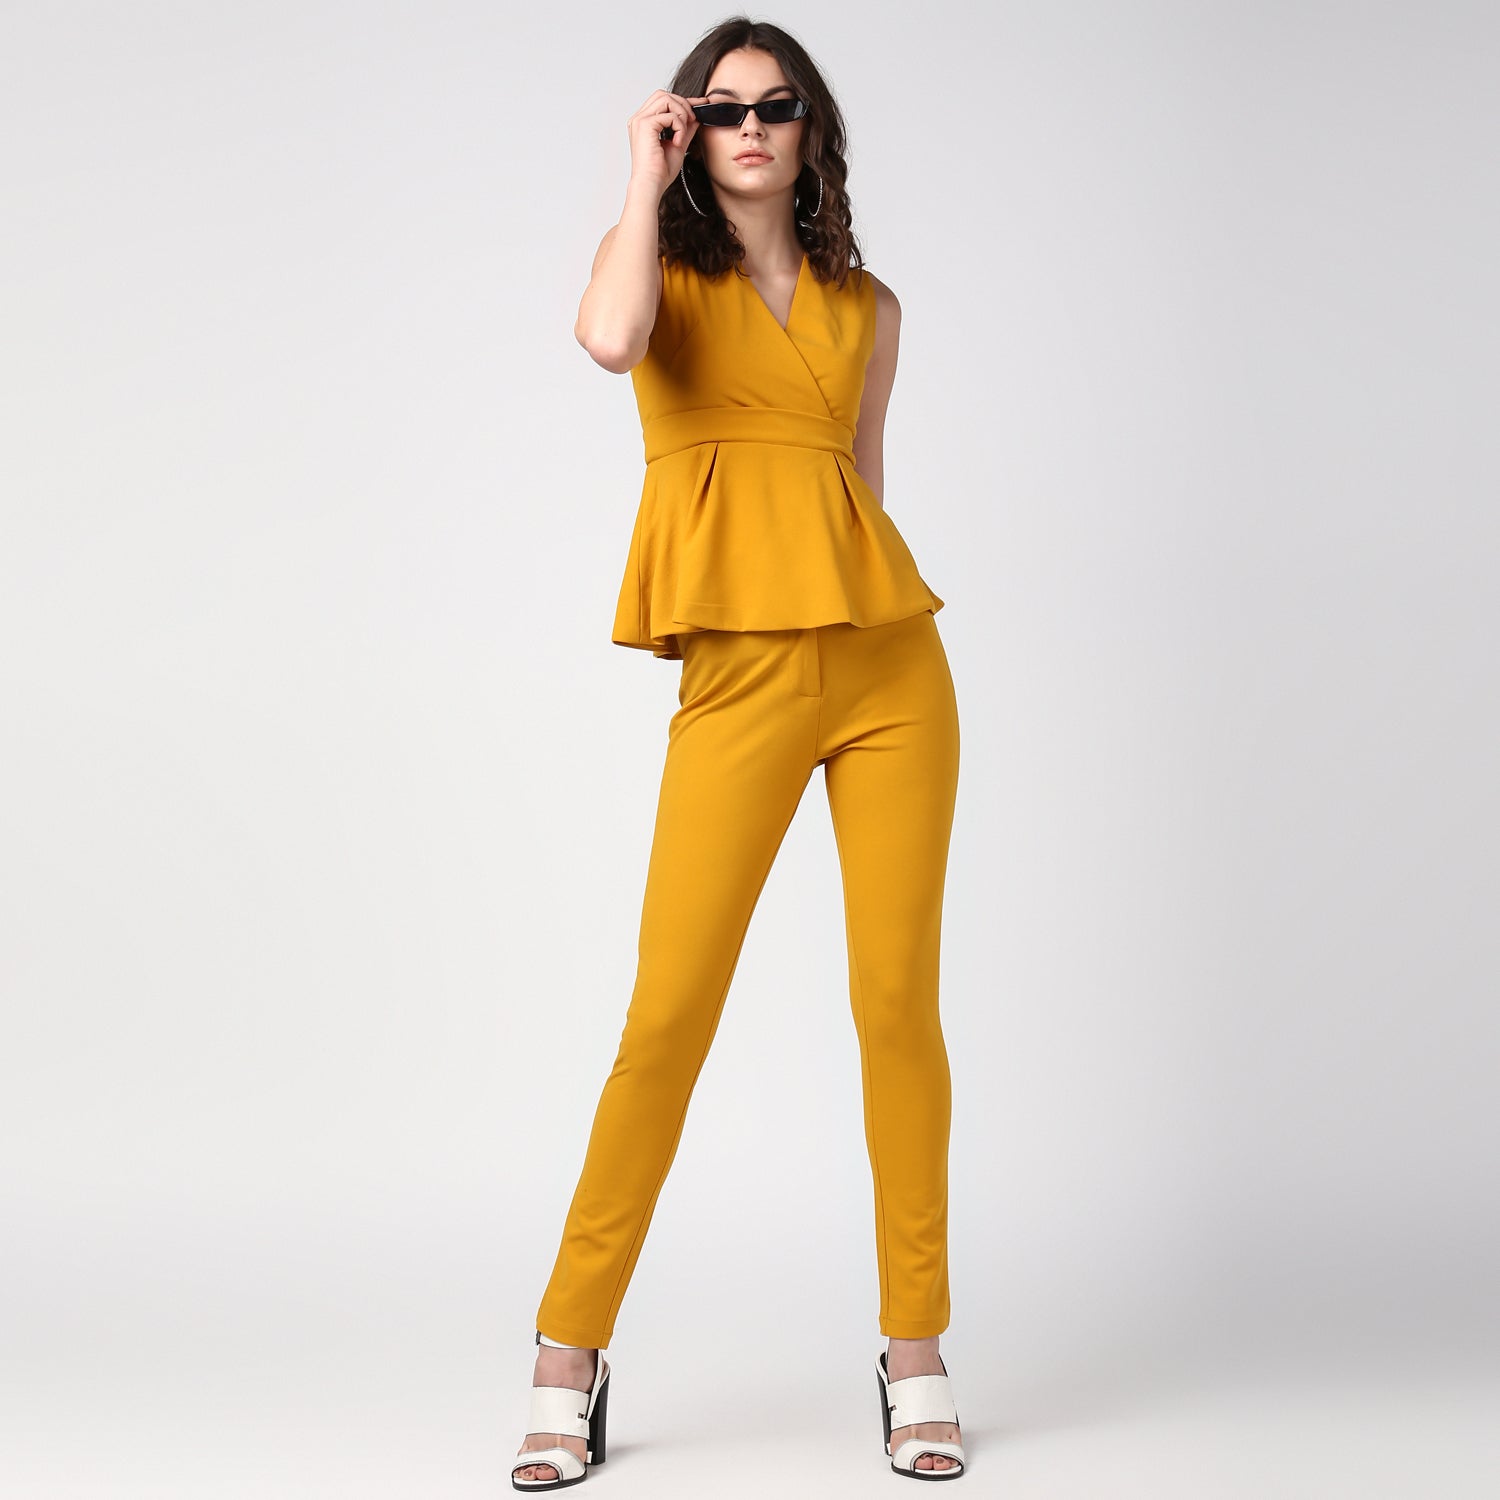 Women's Mustard Yellow Coordinated Peplum Top and Pants Set - StyleStone